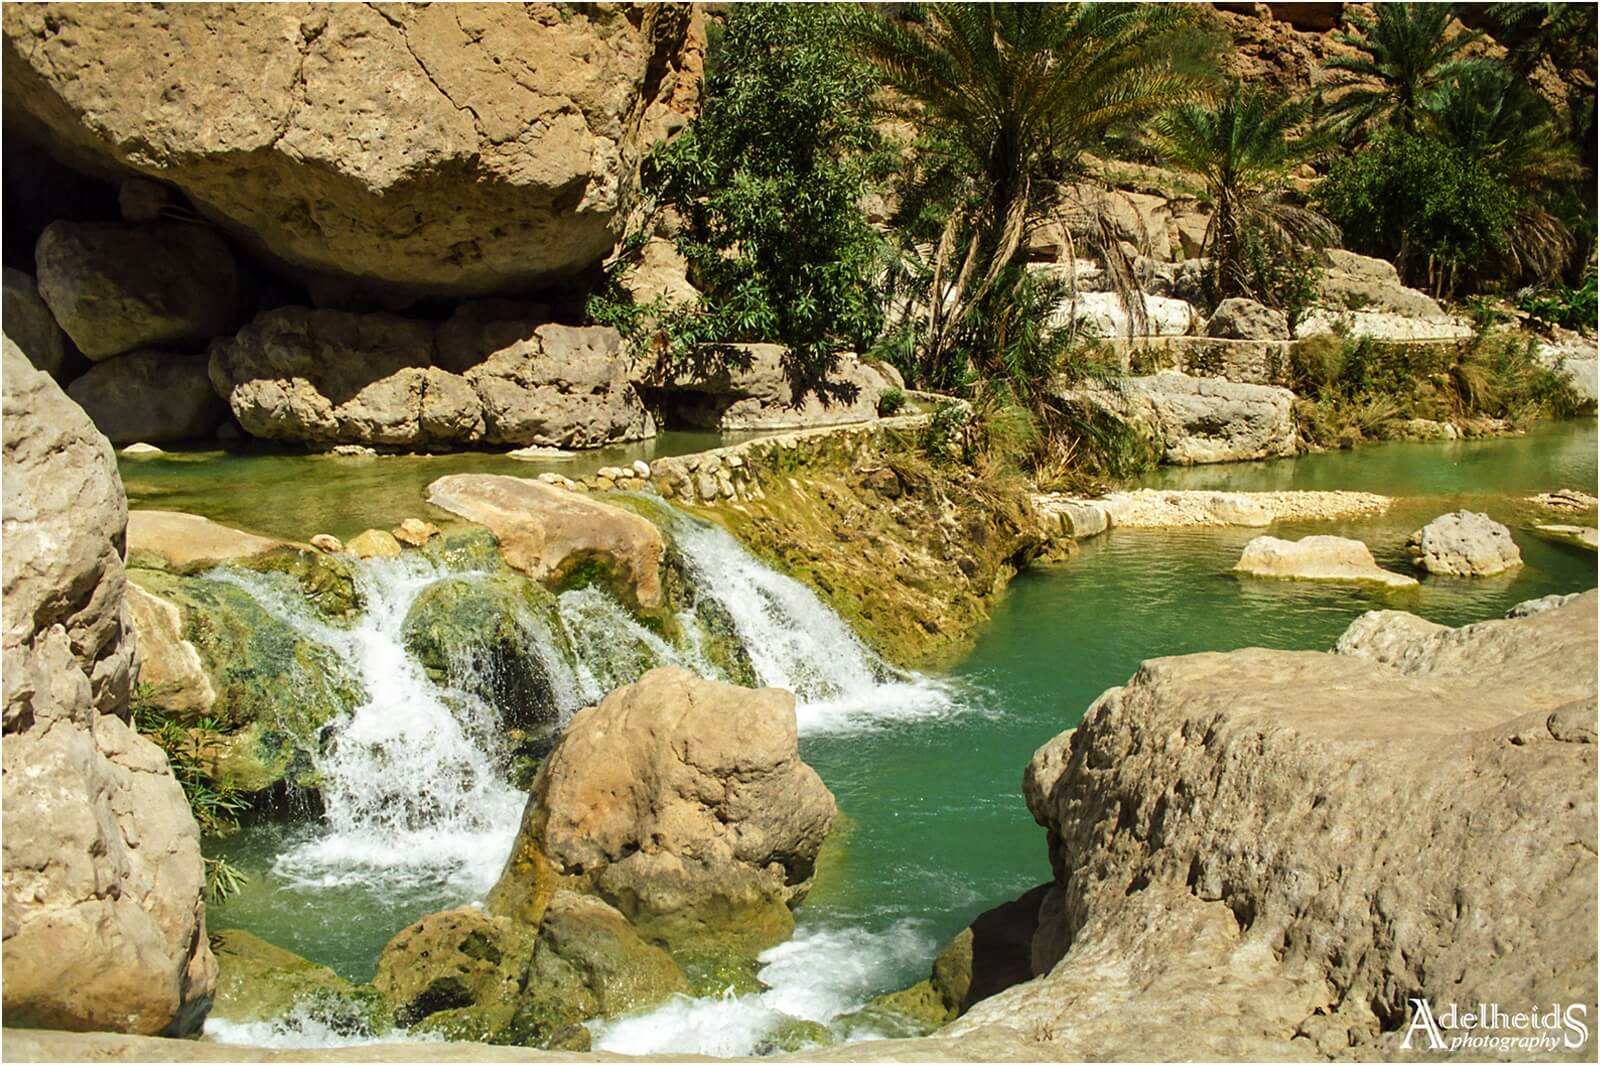 Image of Wadi Shab by Adelheid Smitt